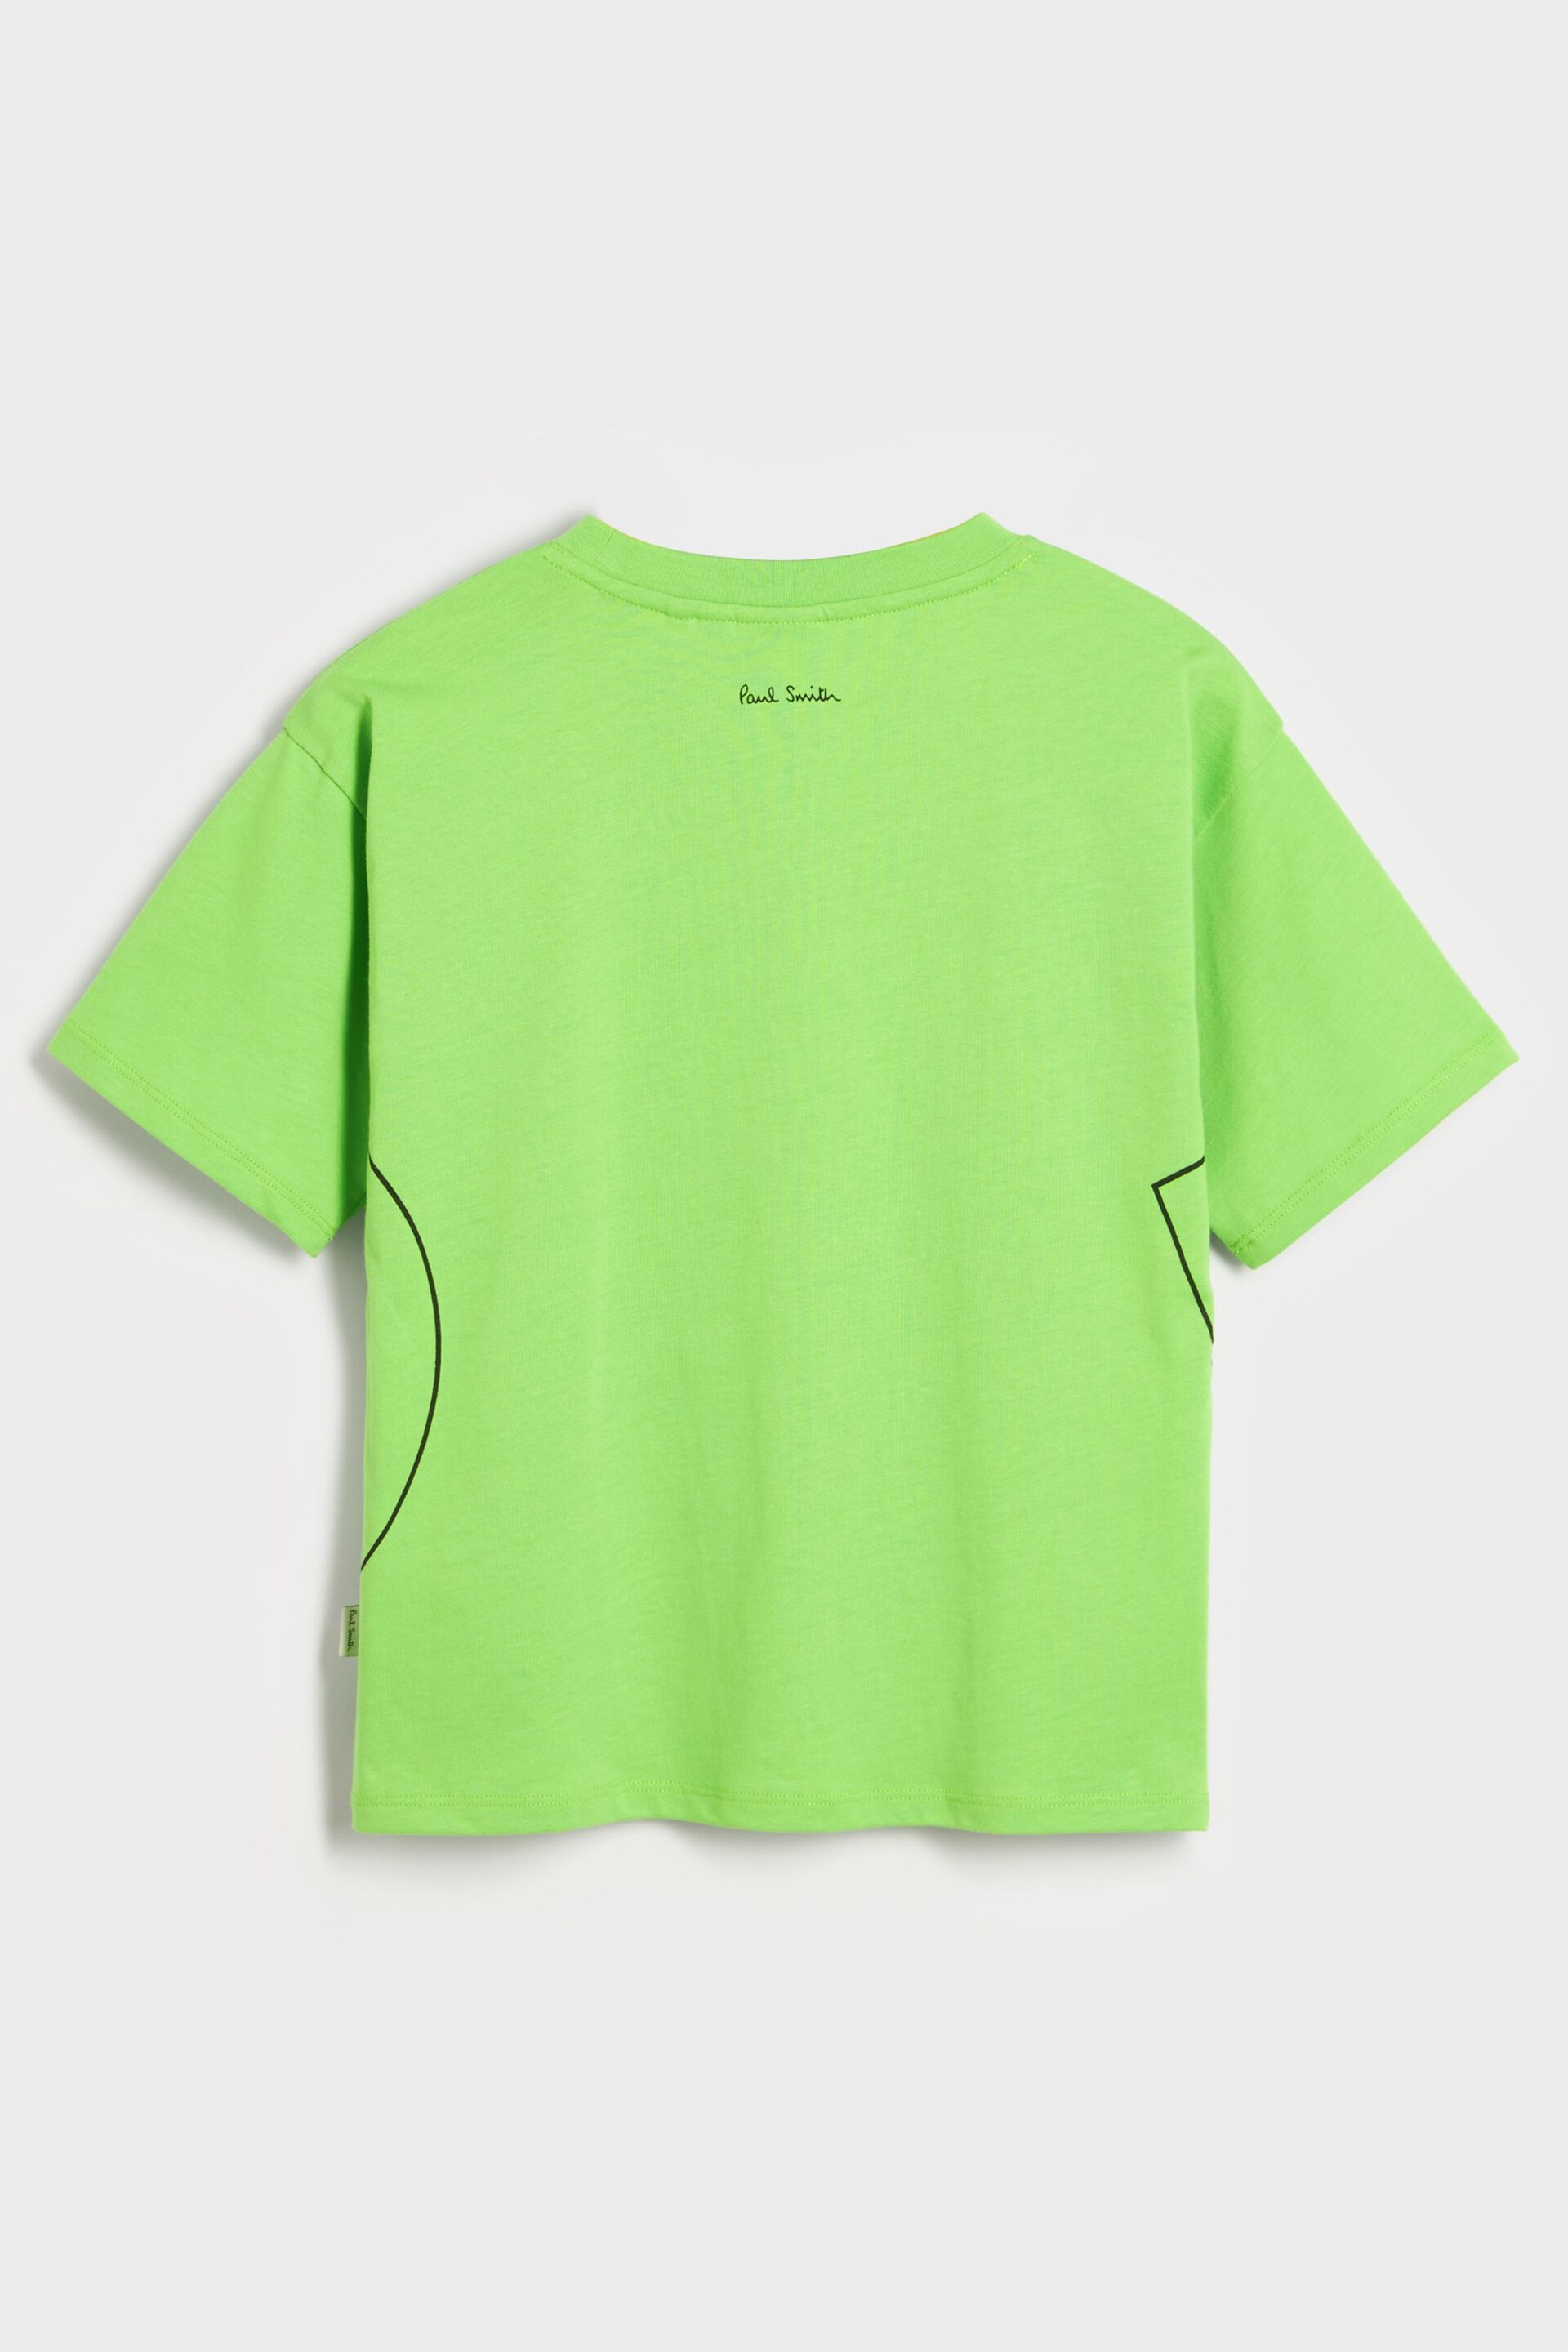 Paul Smith Junior Boys Oversized PS Short Sleeve Print T-Shirt - Image 8 of 10